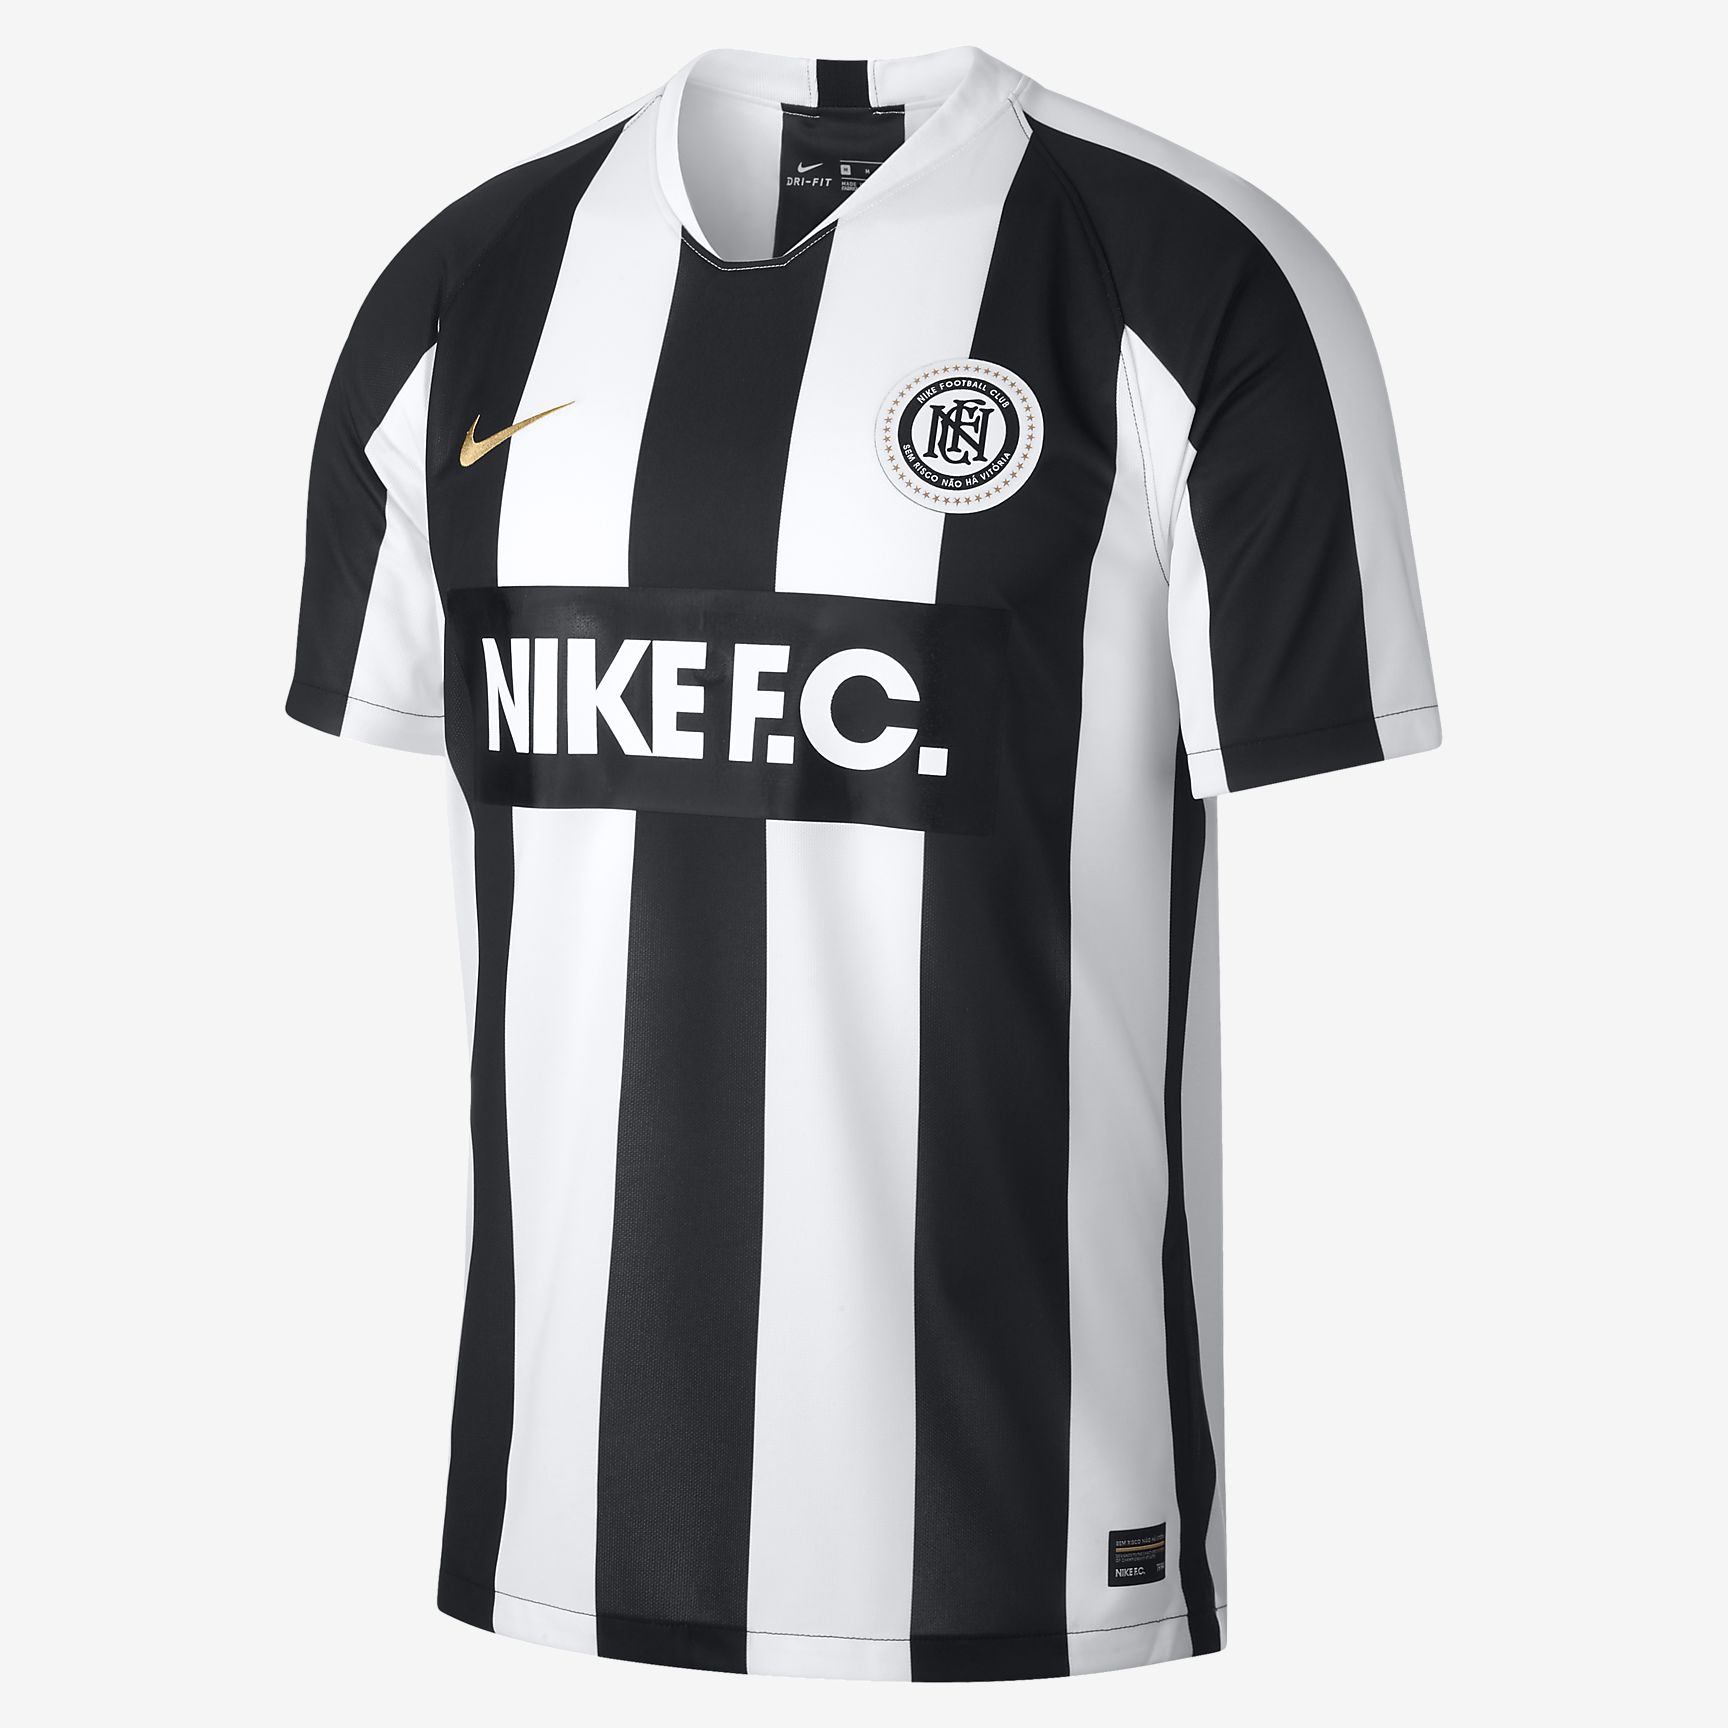 Cadeau nicht Verfrissend Nike lanceert vette NIKE F.C. voetbalshirts 2018-2 - Voetbalshirts.com